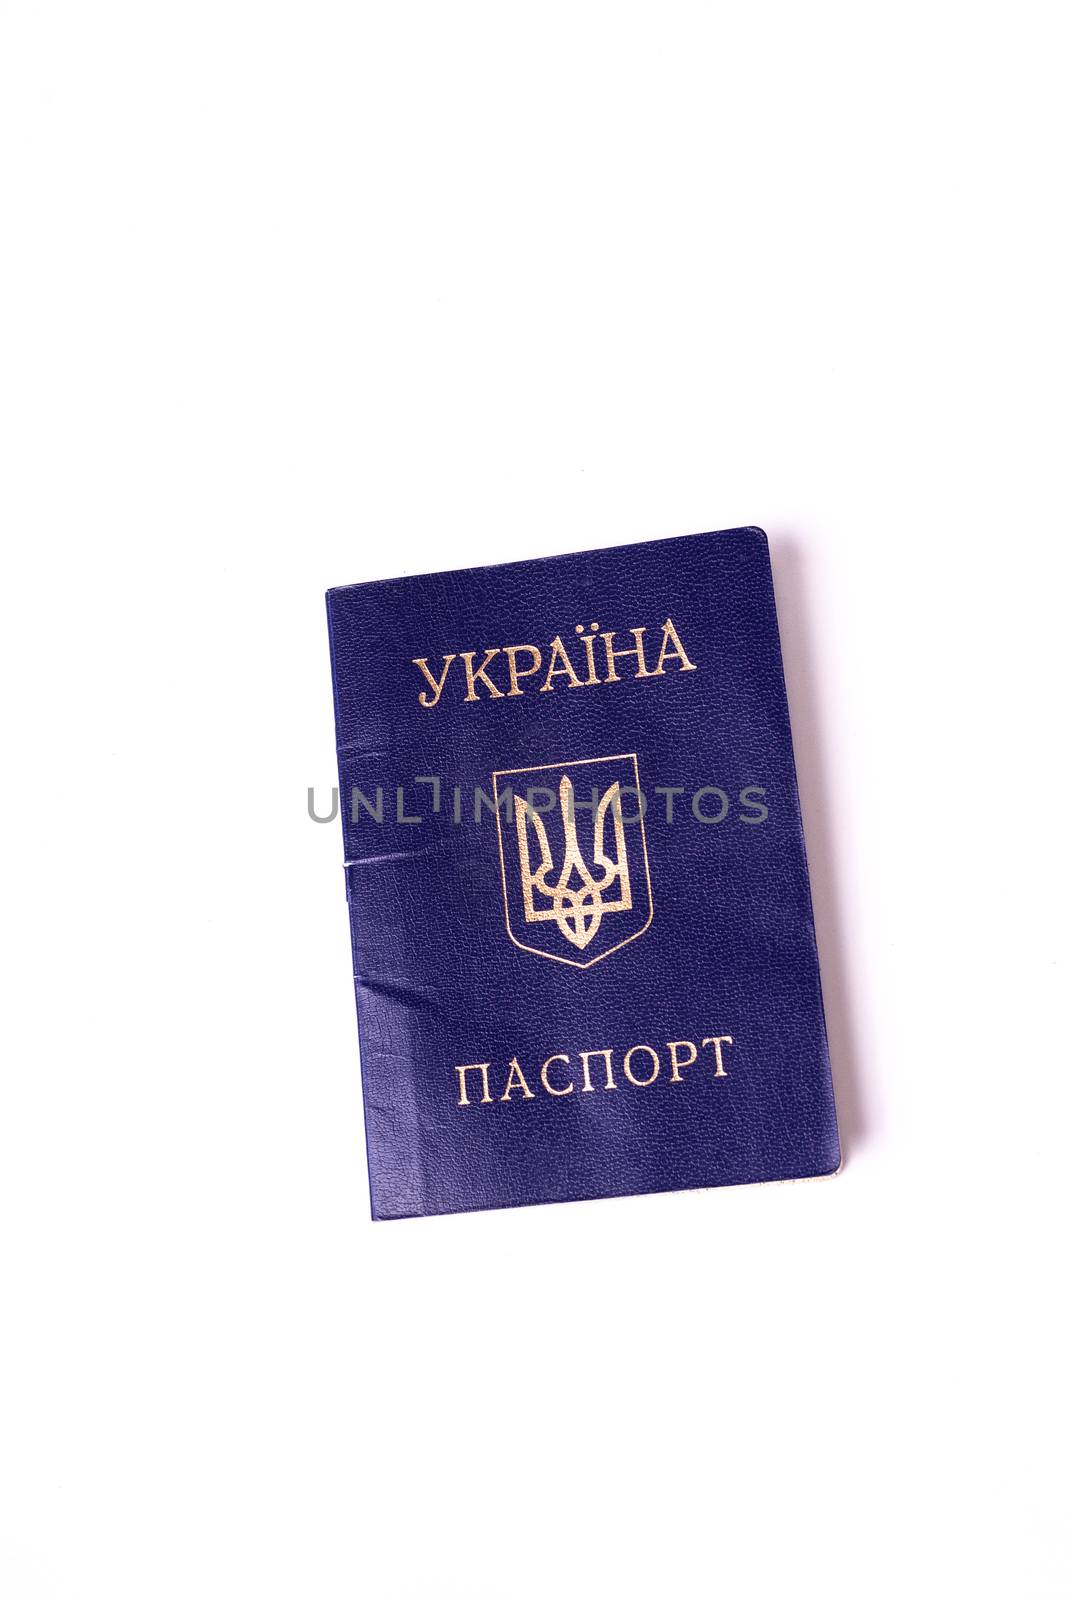 Blue Ukrainian passport isolated on white background. Passport i by alexsdriver